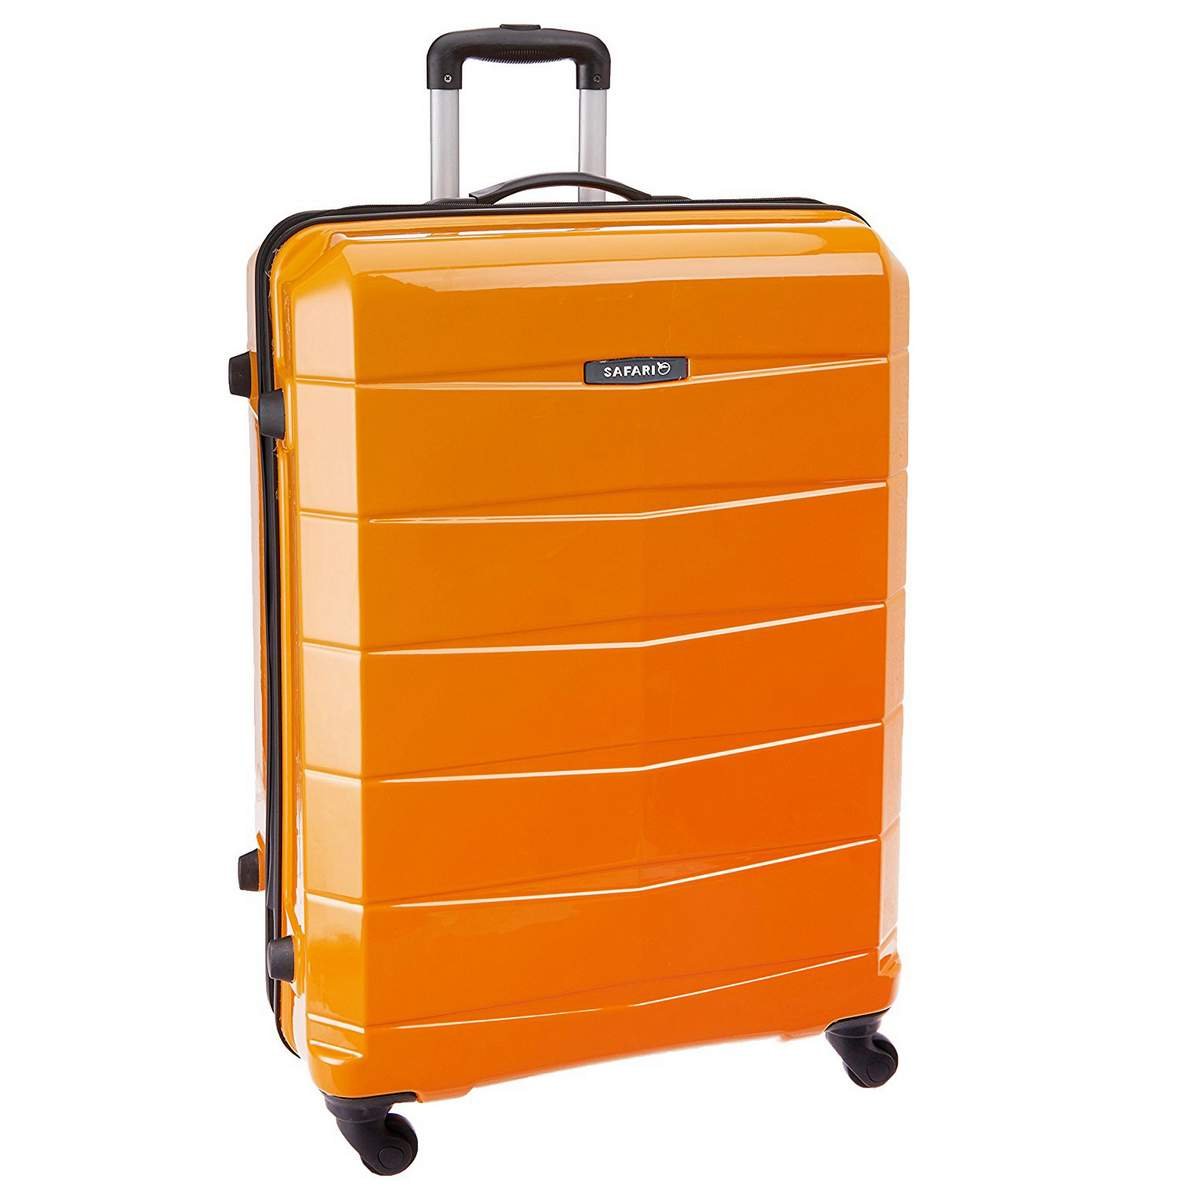 17 Best Hardside Luggage Picks for Carryon Travel